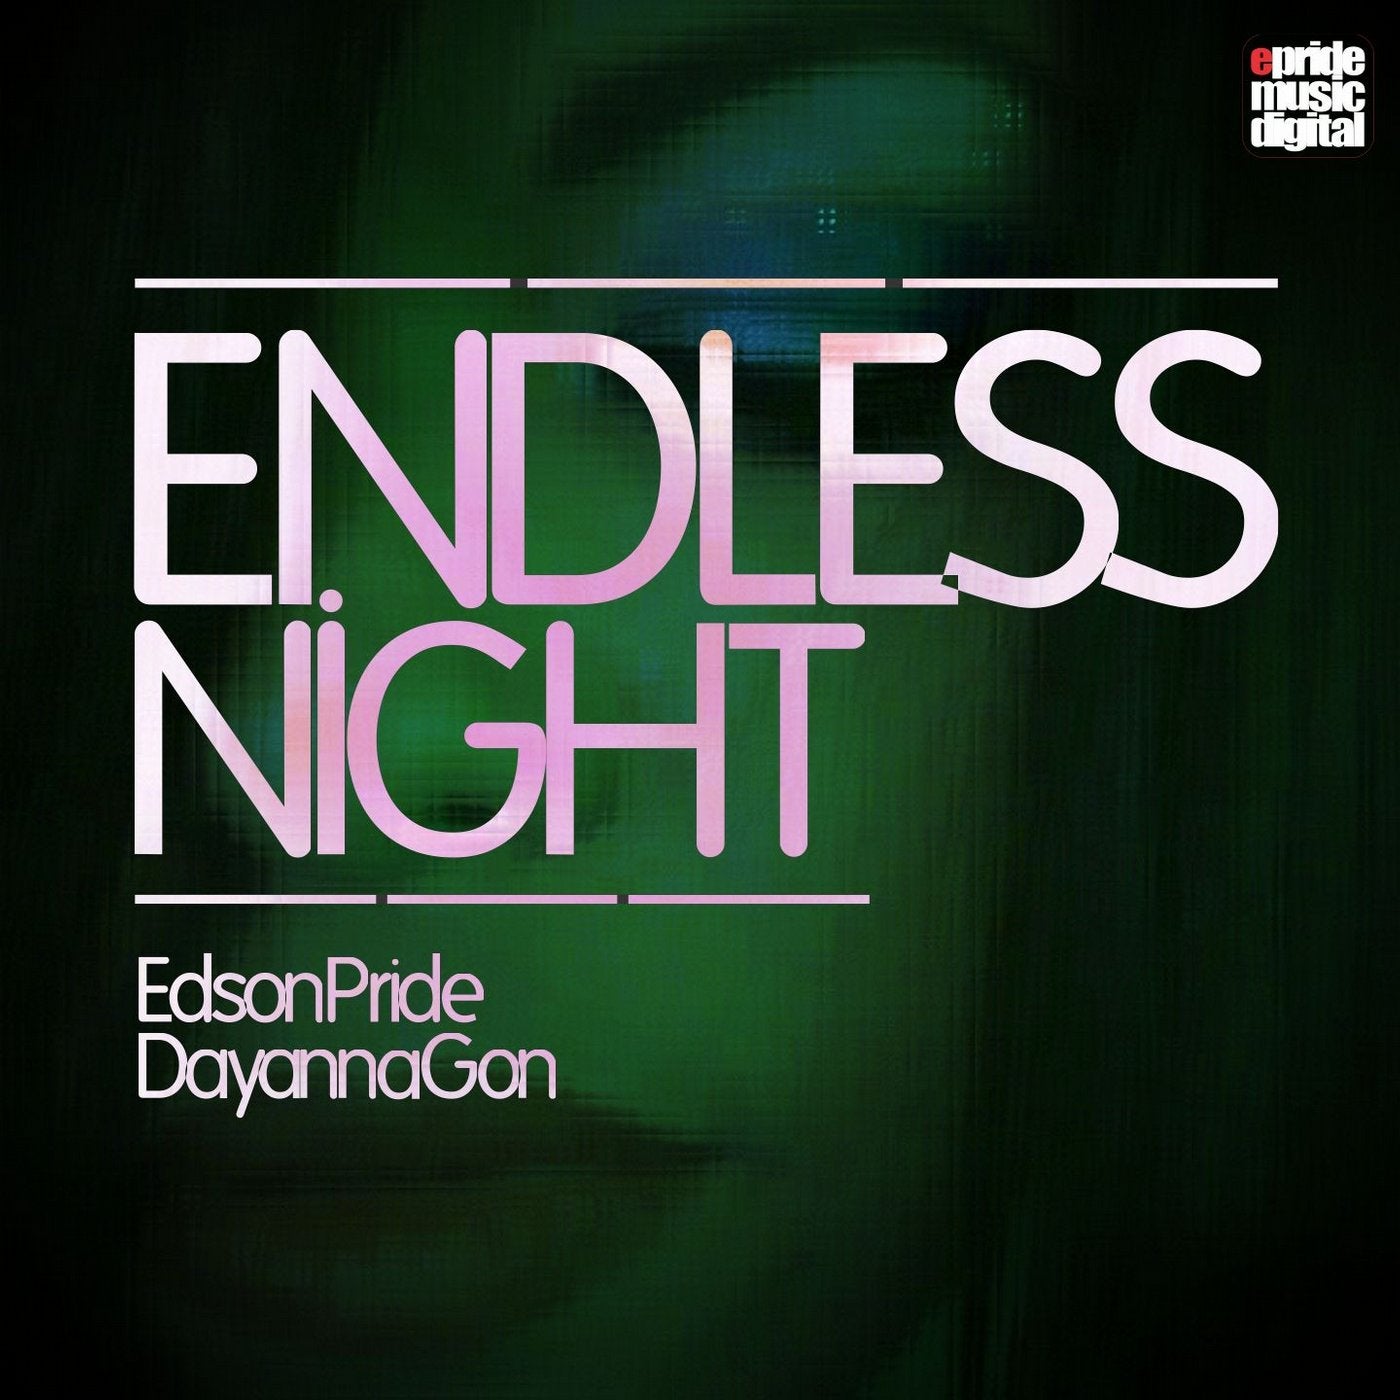 Endless Night (Remixes Part 2)